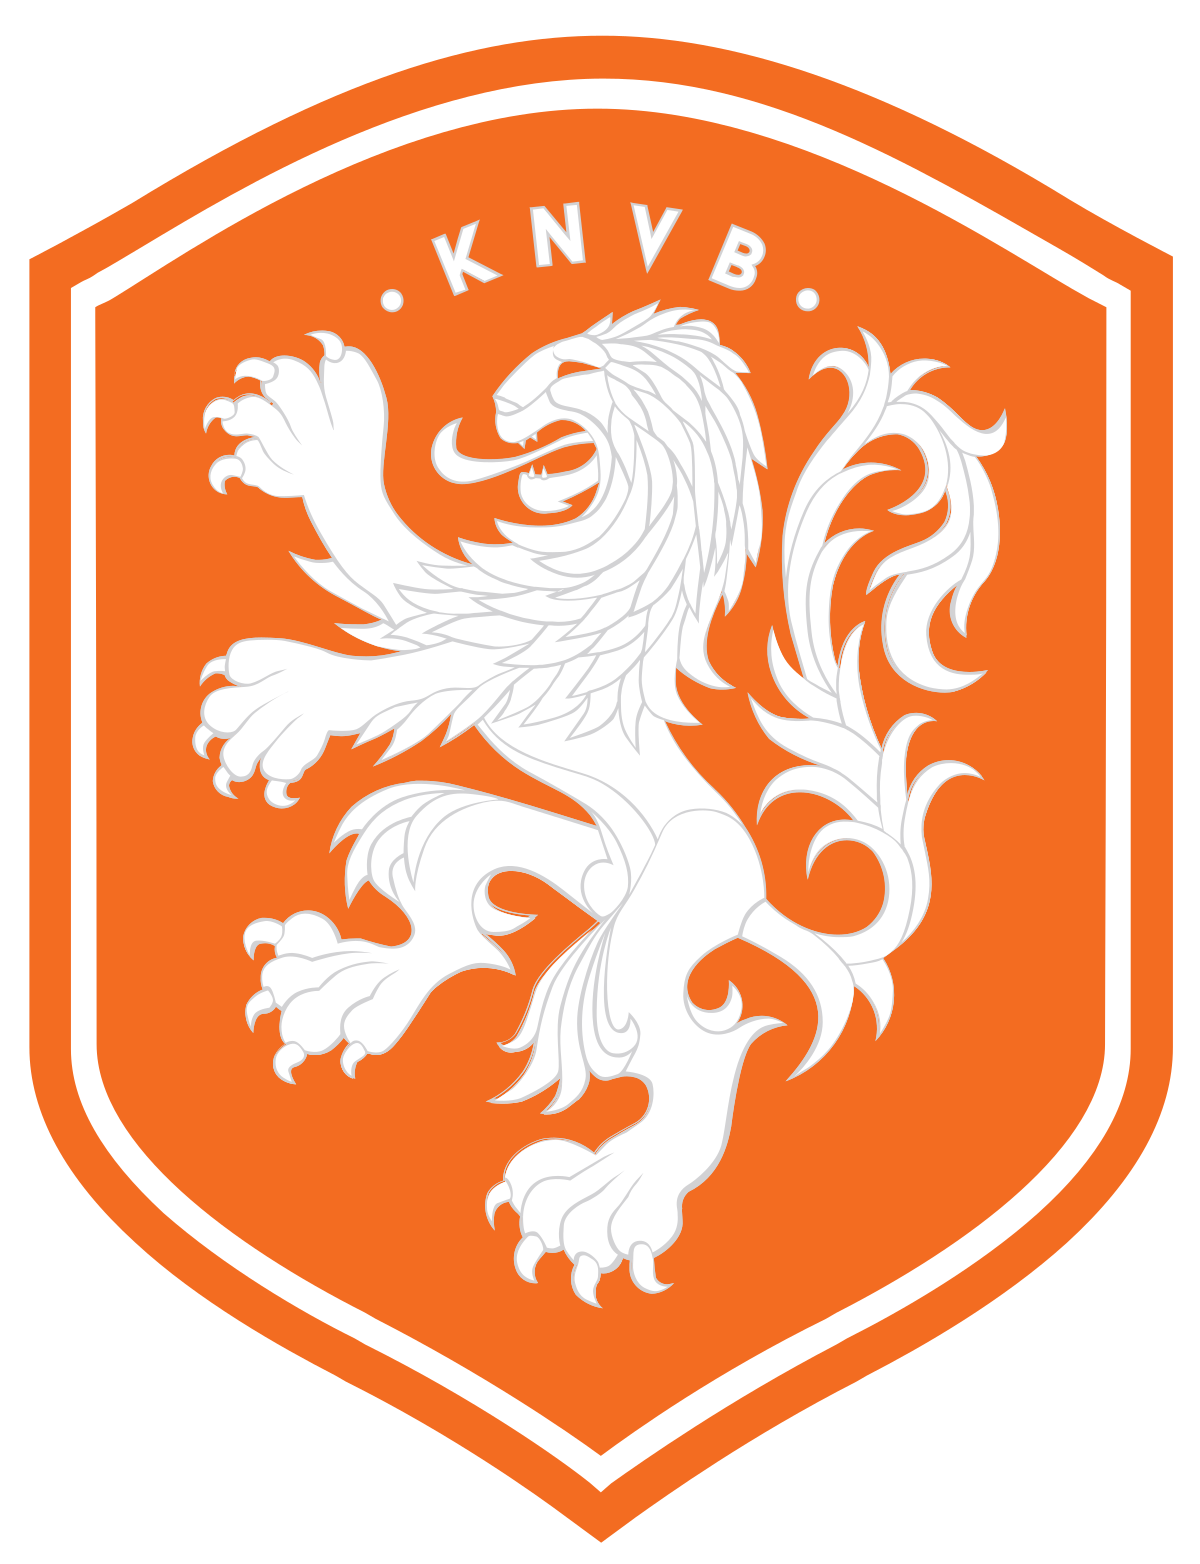 netherlands football